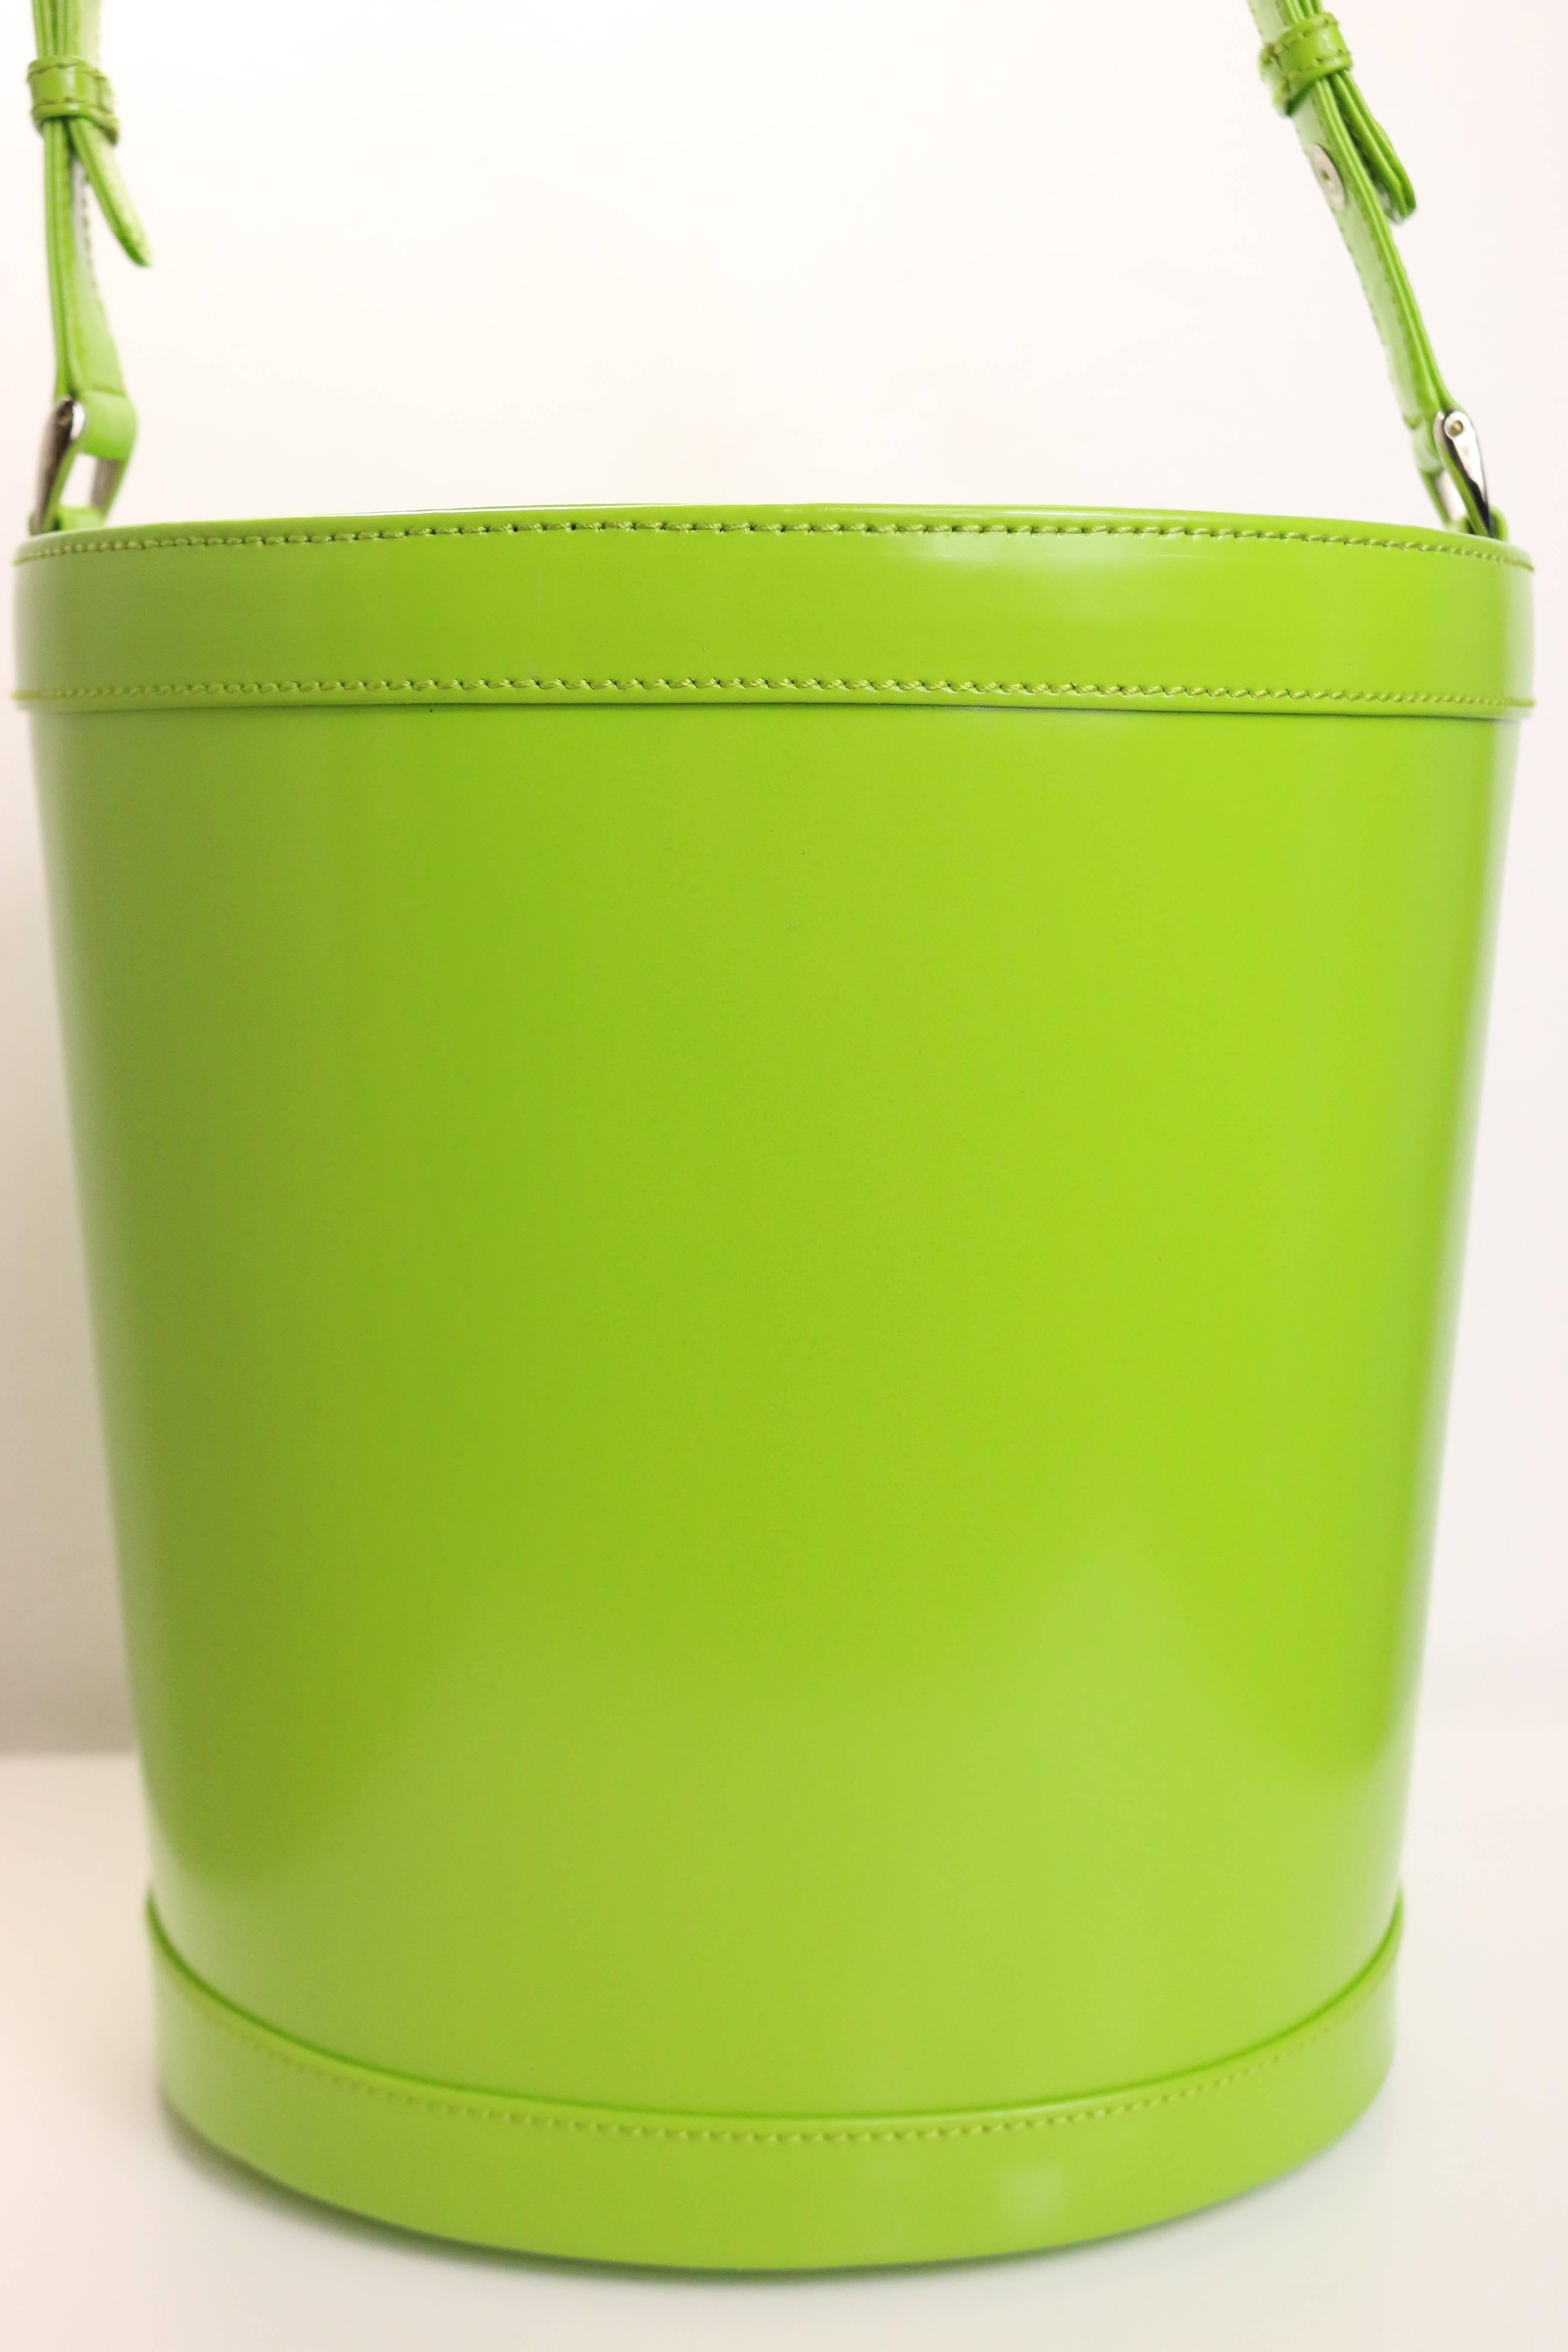 gucci lime green bag